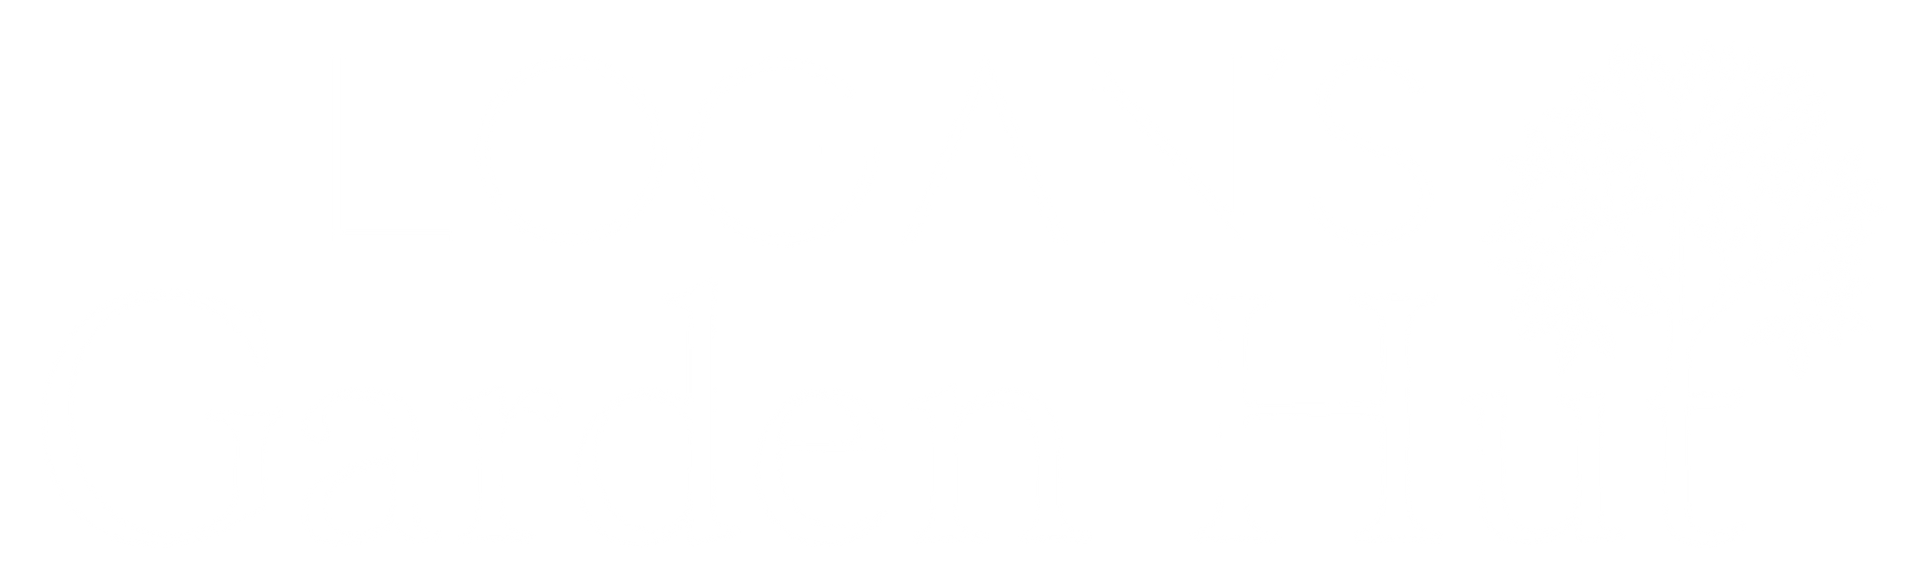 Logan's Garden Hut logo